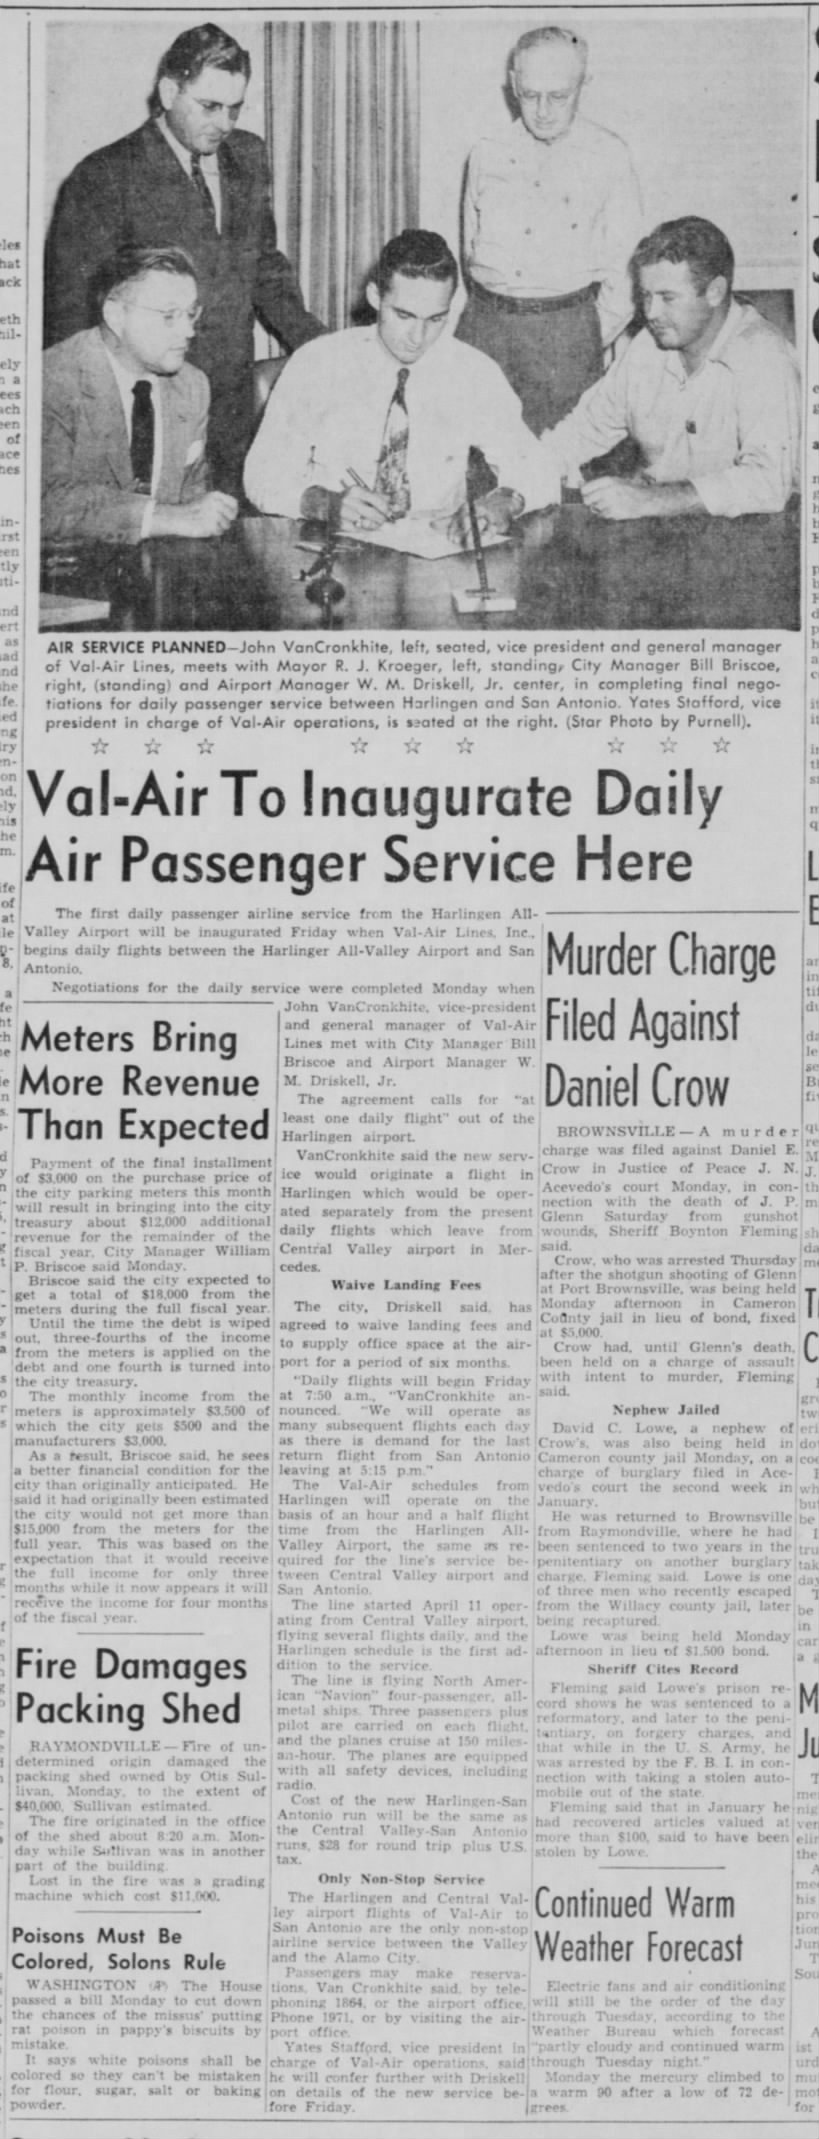 Val Air Central Valley Airport Valley Morning Star May 13 1947